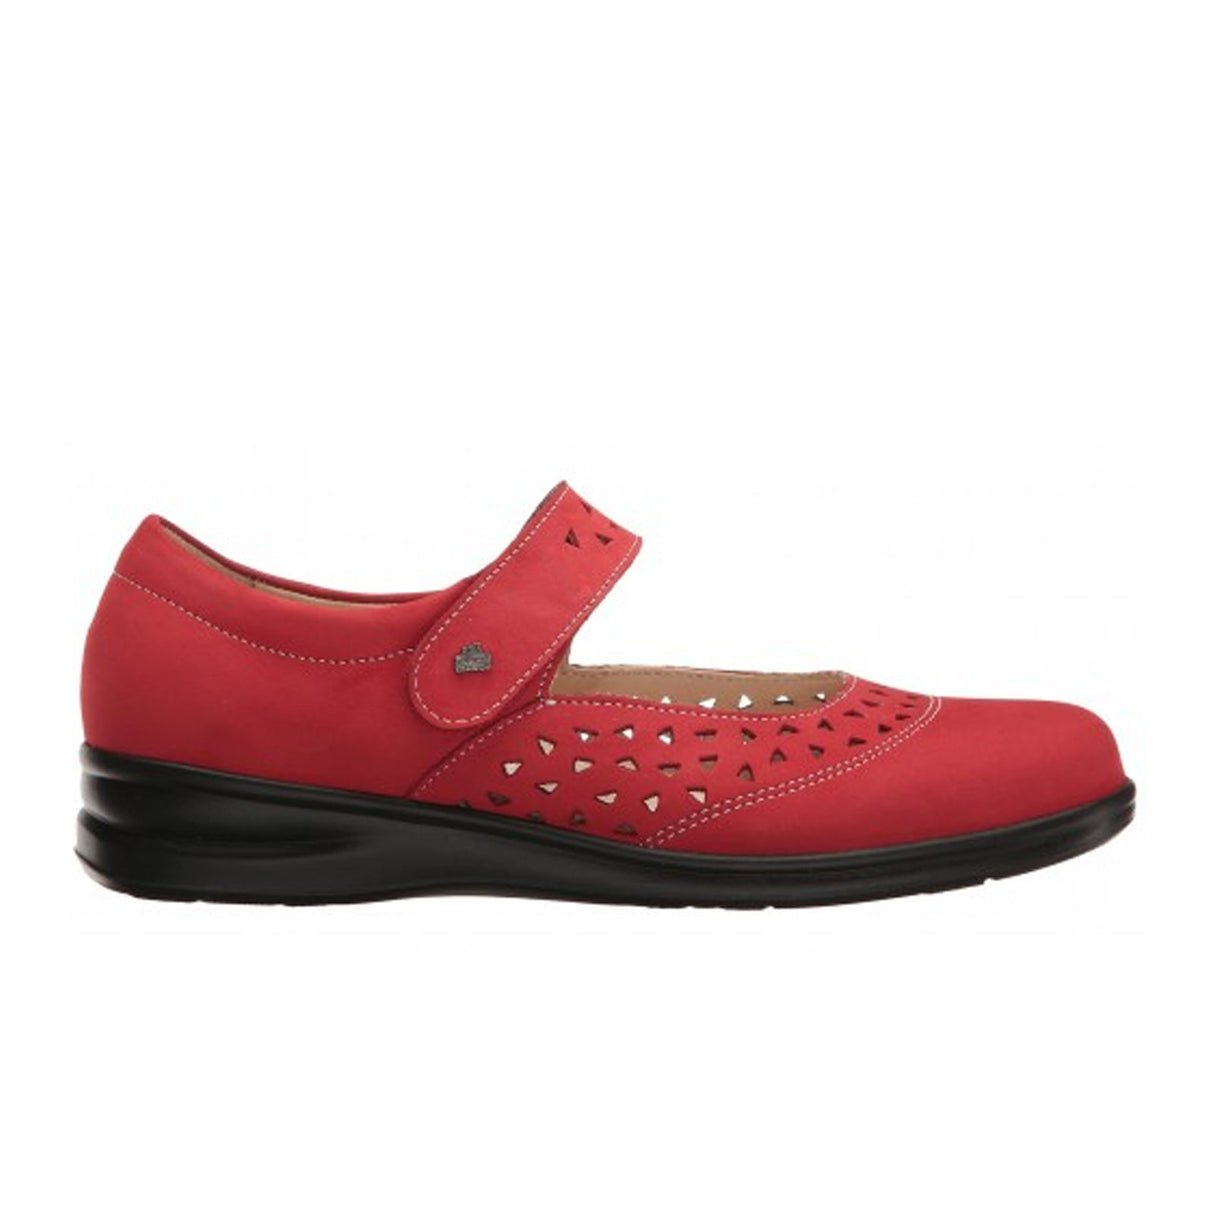 Finn Comfort Anzio (Women) - Nubuck Red Dress-Casual - Mary Janes - The Heel Shoe Fitters